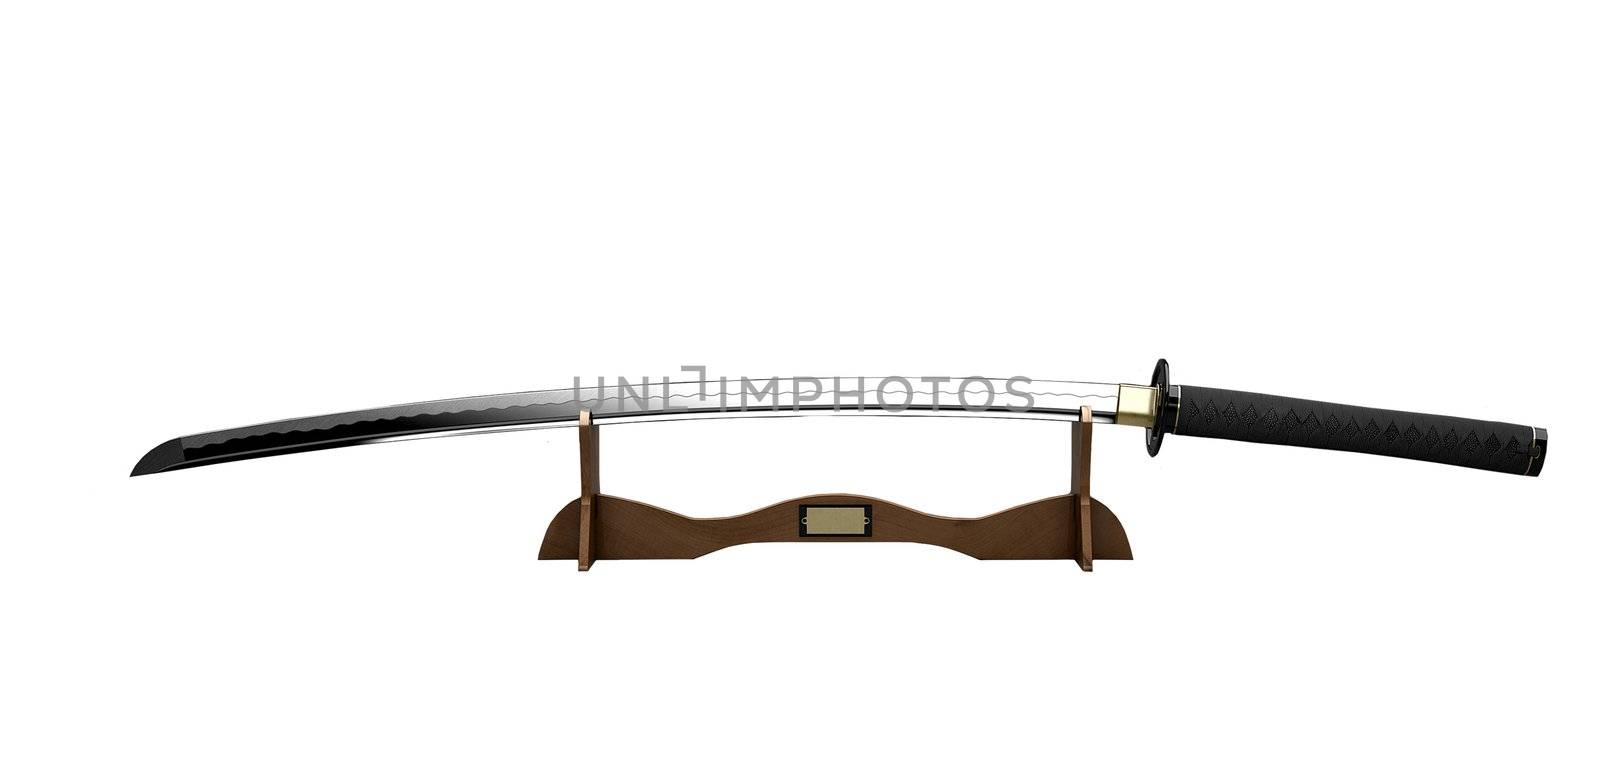 Samurai sword on a stand by shutswis